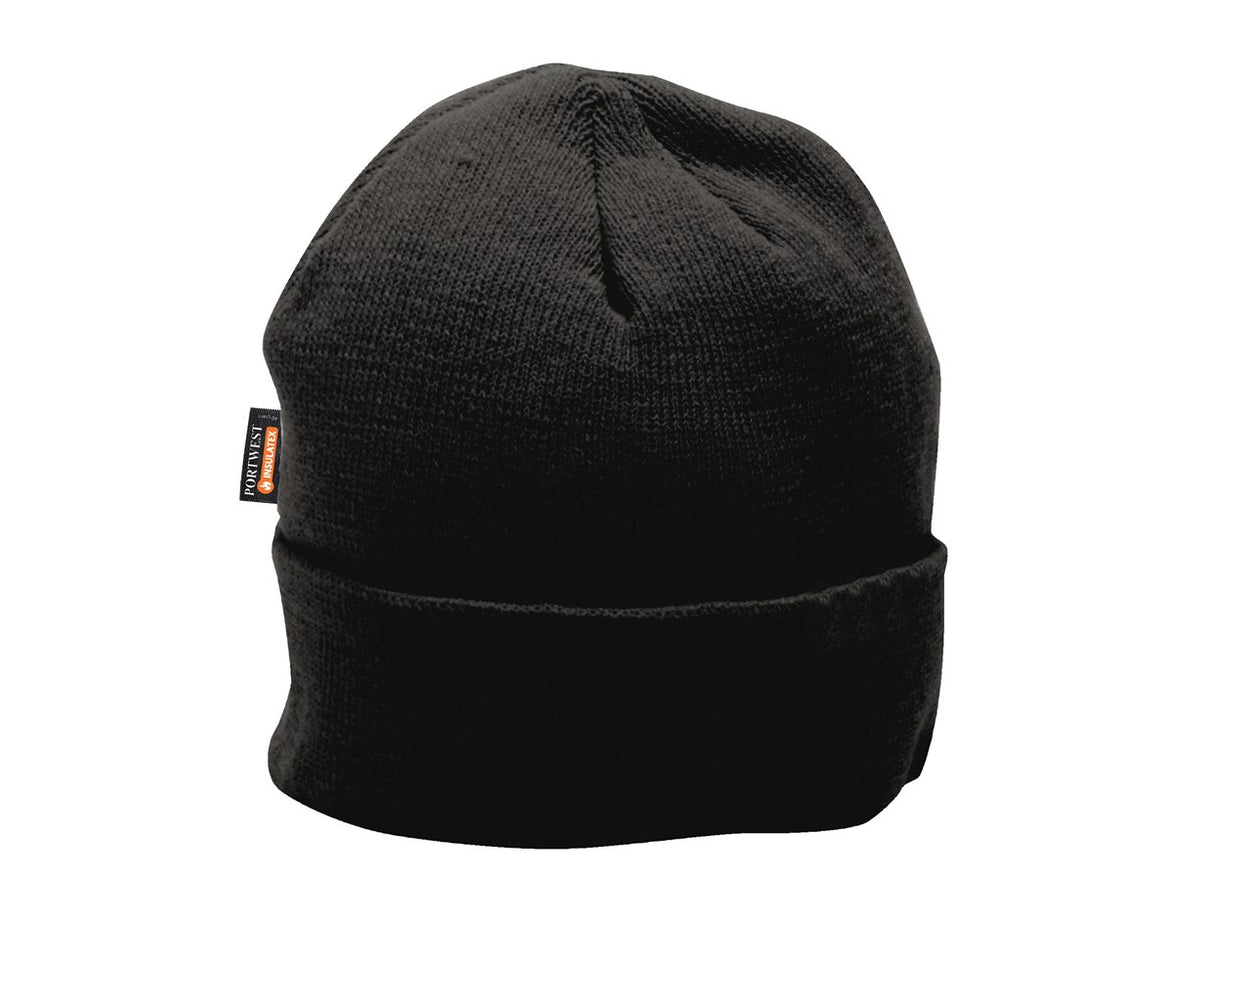 Knit Hat Insulatex Lined Black BO13BK (SINGLE OR MULTI-PACK)